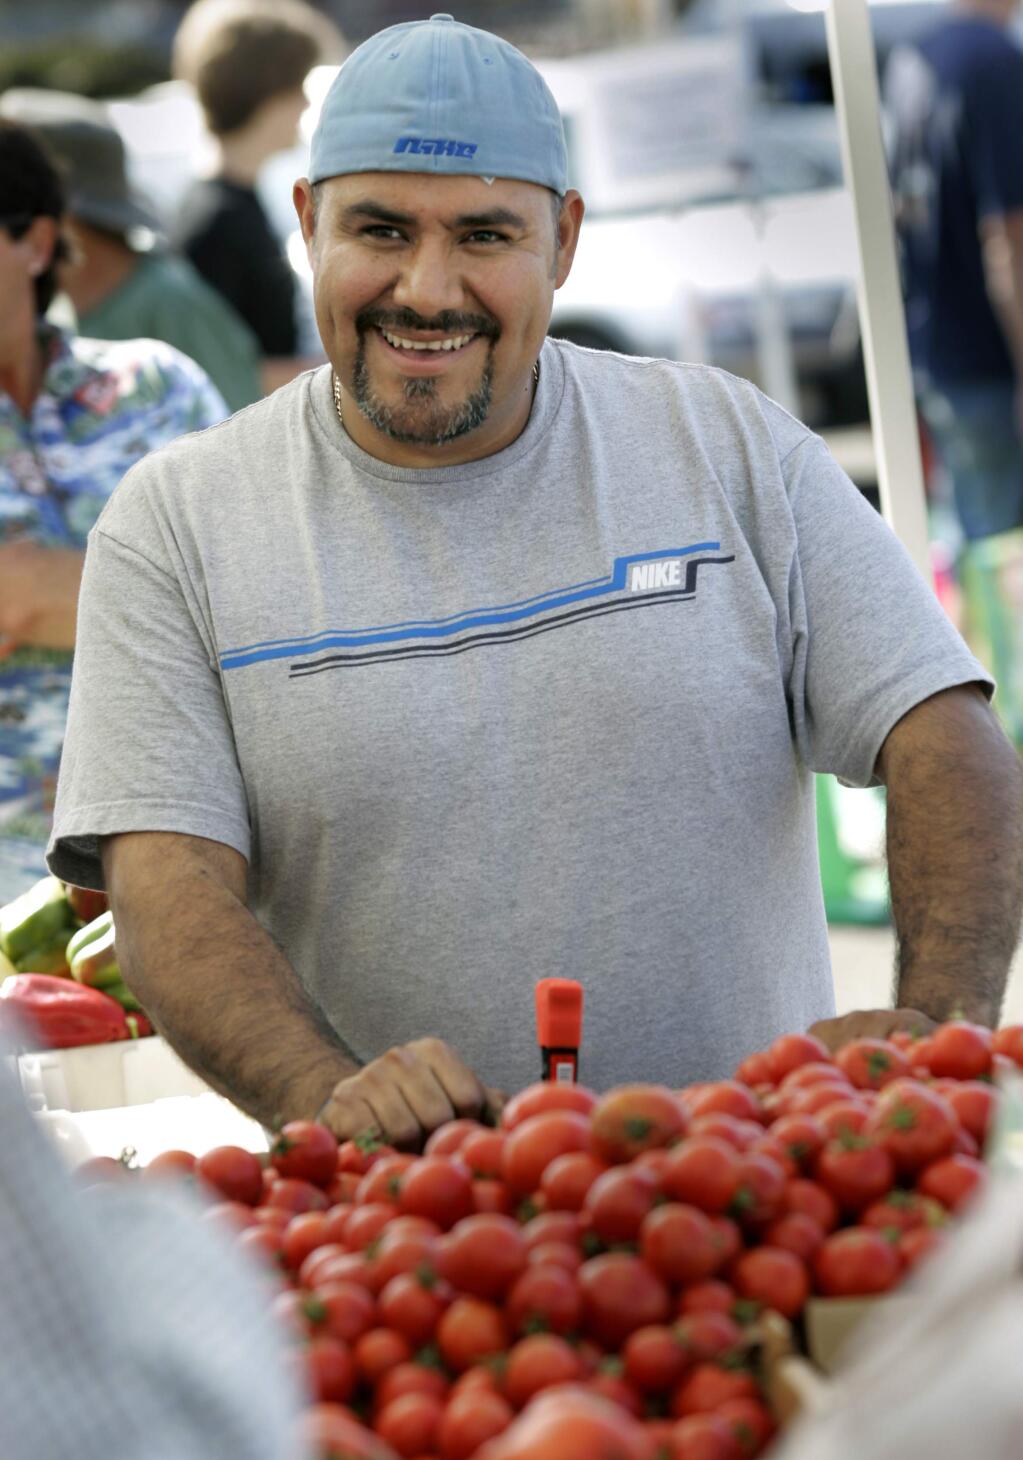 Lazaro Calderon of 'The Patch' in Sonoma sells his fruits and vegetables at the Santa Rosa farmers market, Saturday September 26, 2009. (Kent Porter / Press Democrat)